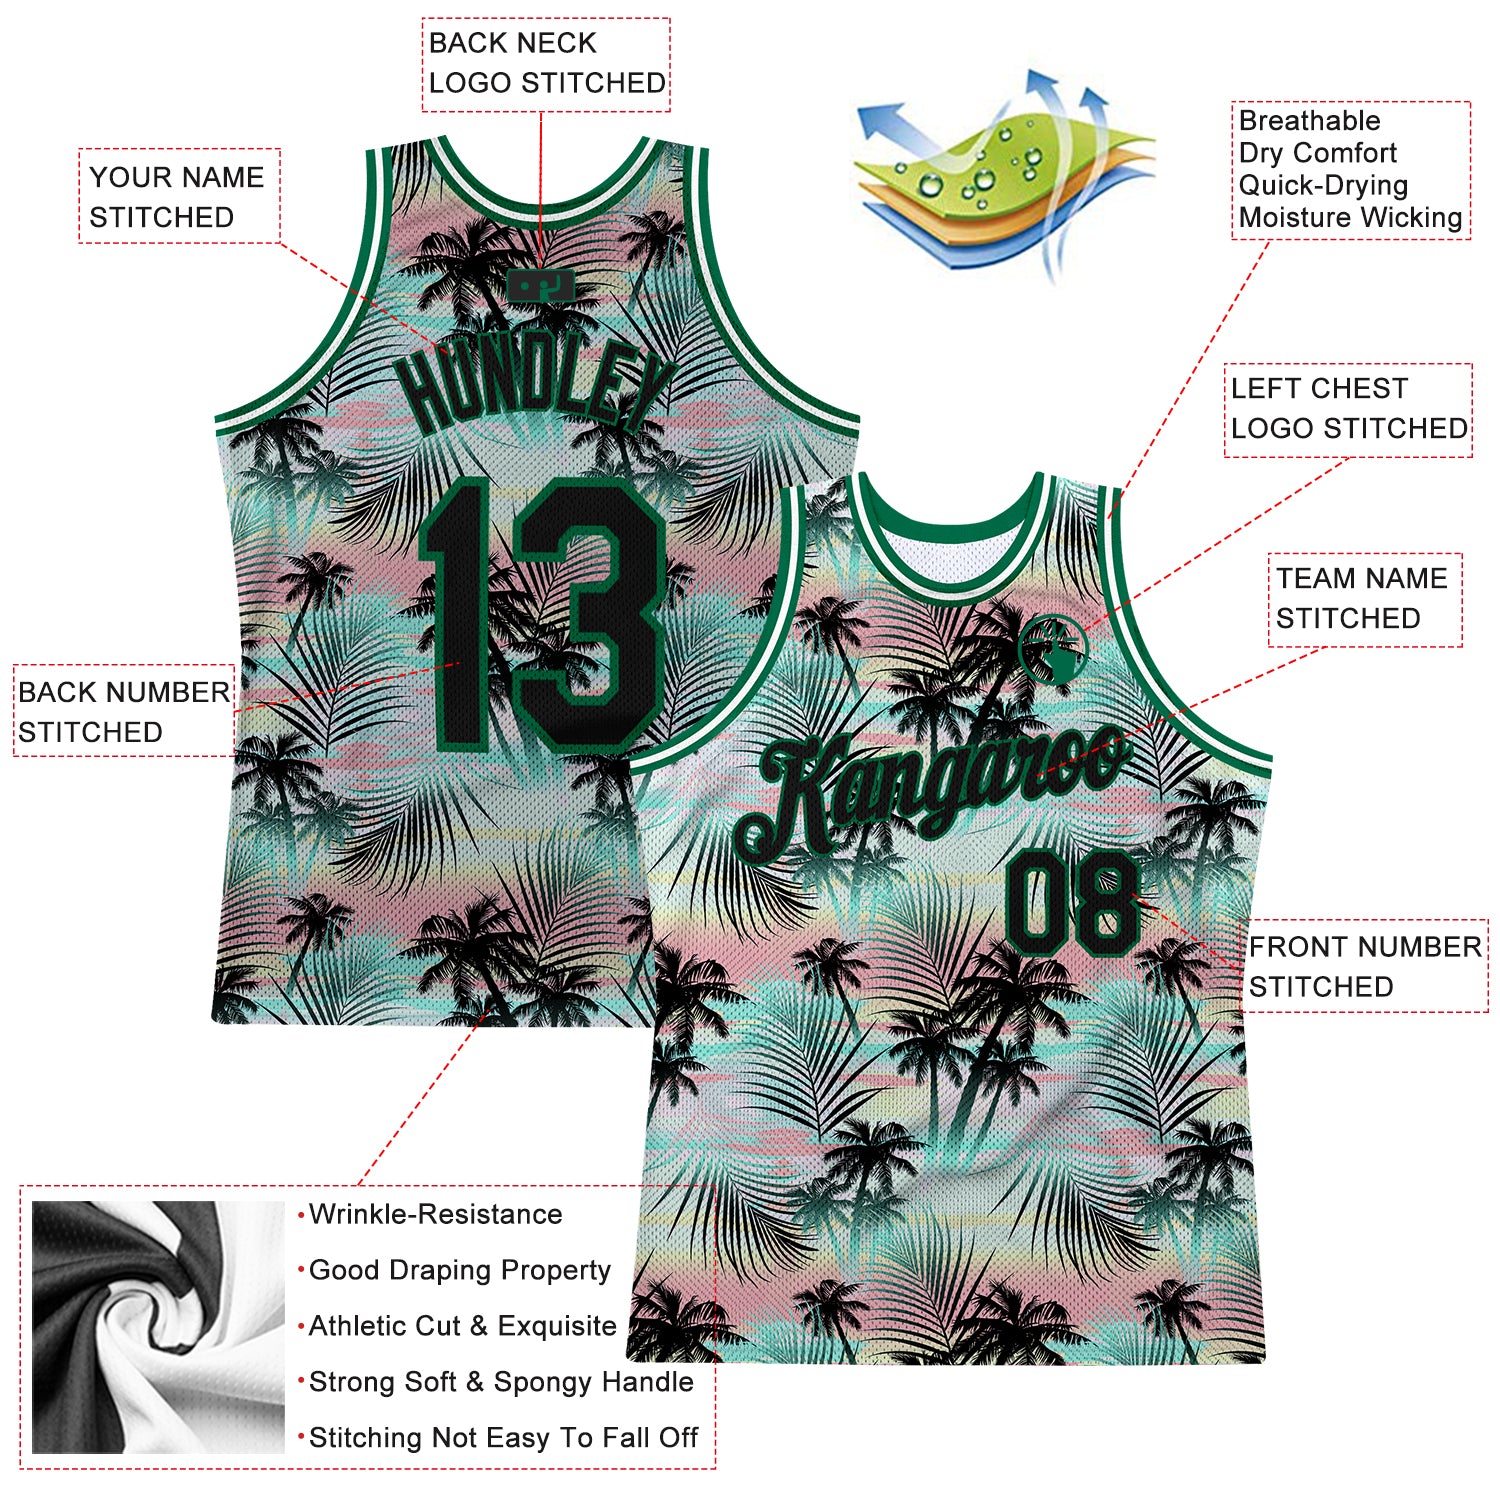 BLACK FLOWER JERSEY DESIGN  Best basketball jersey design, Jersey design, Basketball  jersey design ideas sublimation